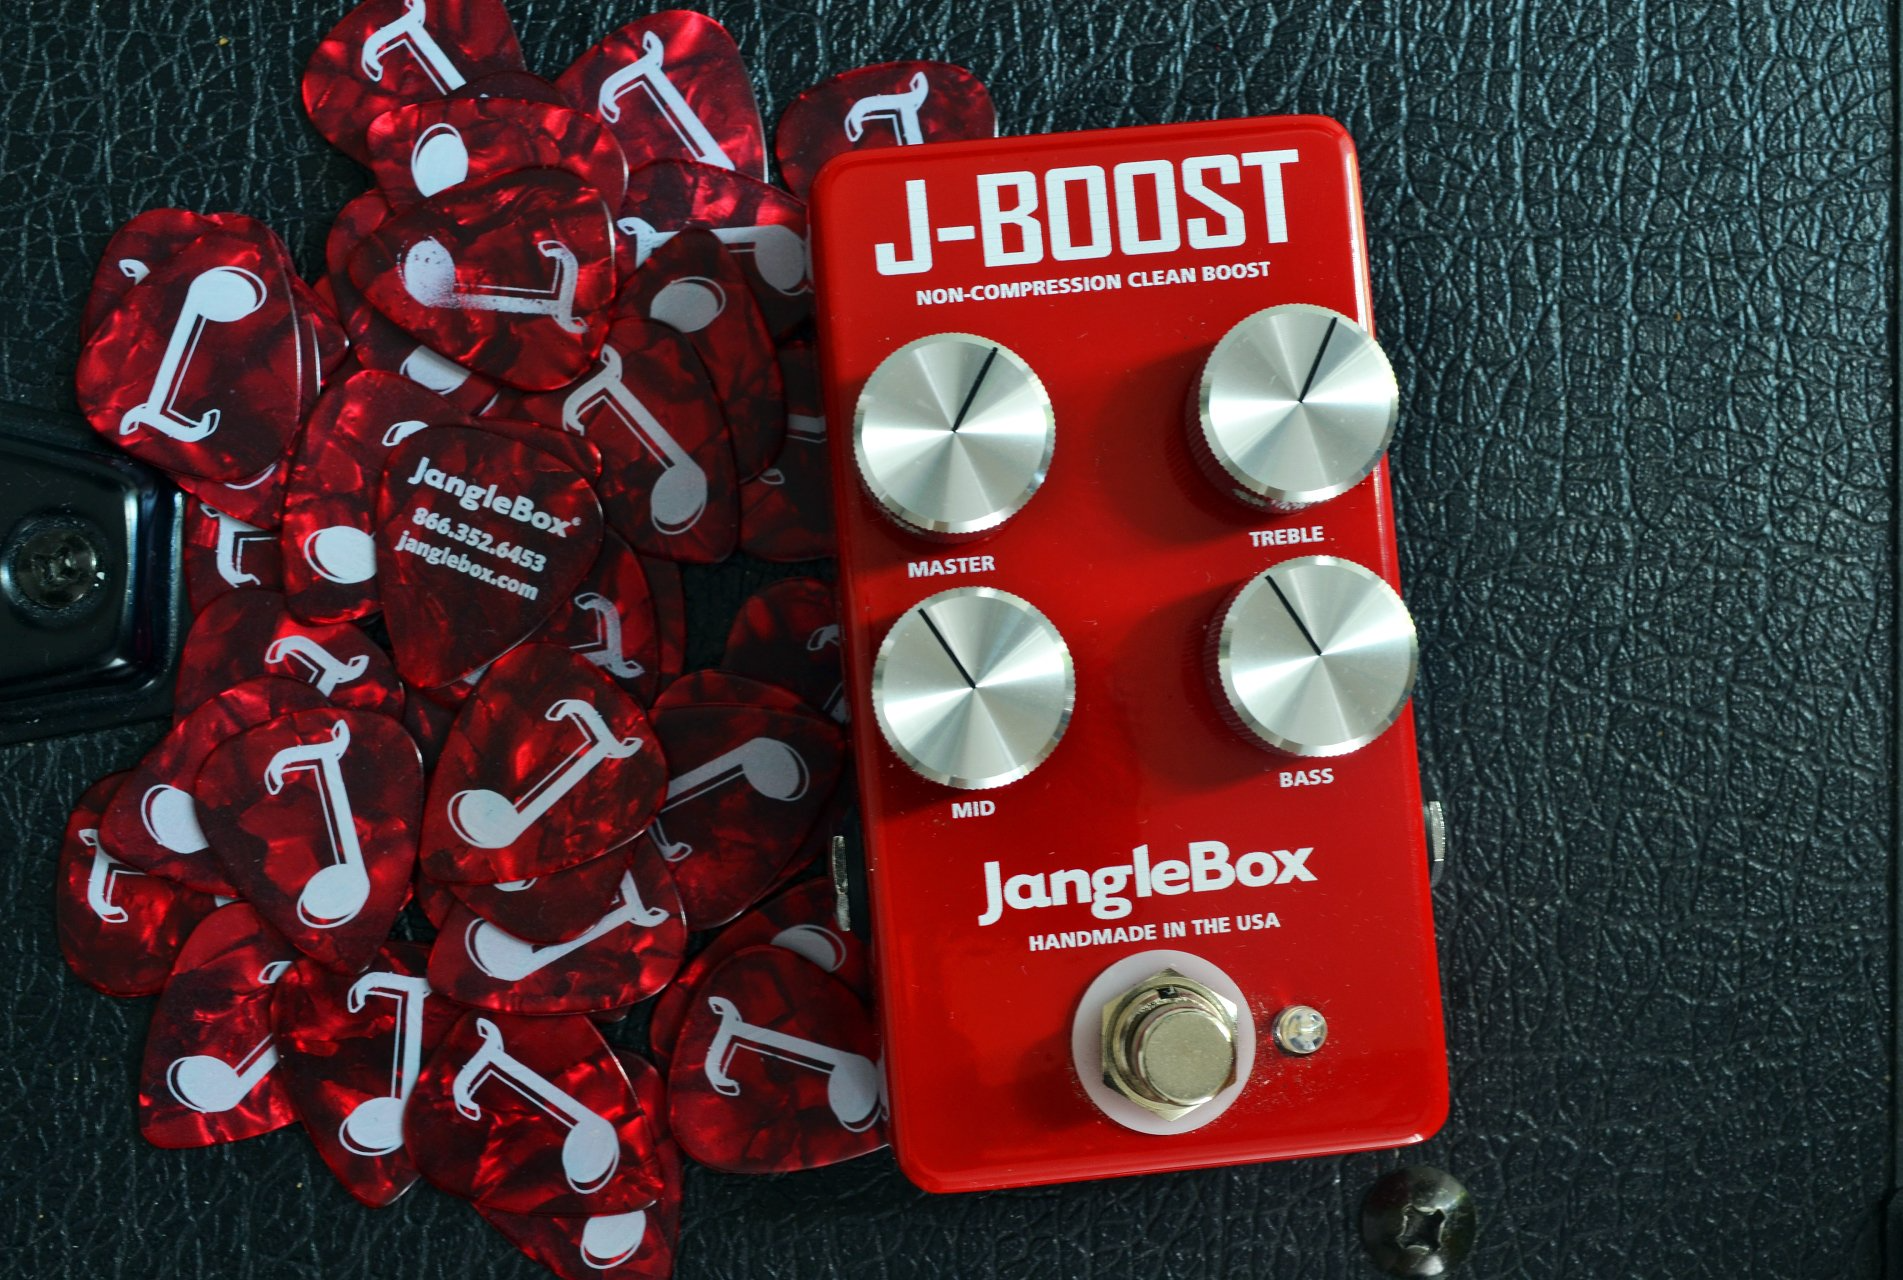 JangleBox J-Boost